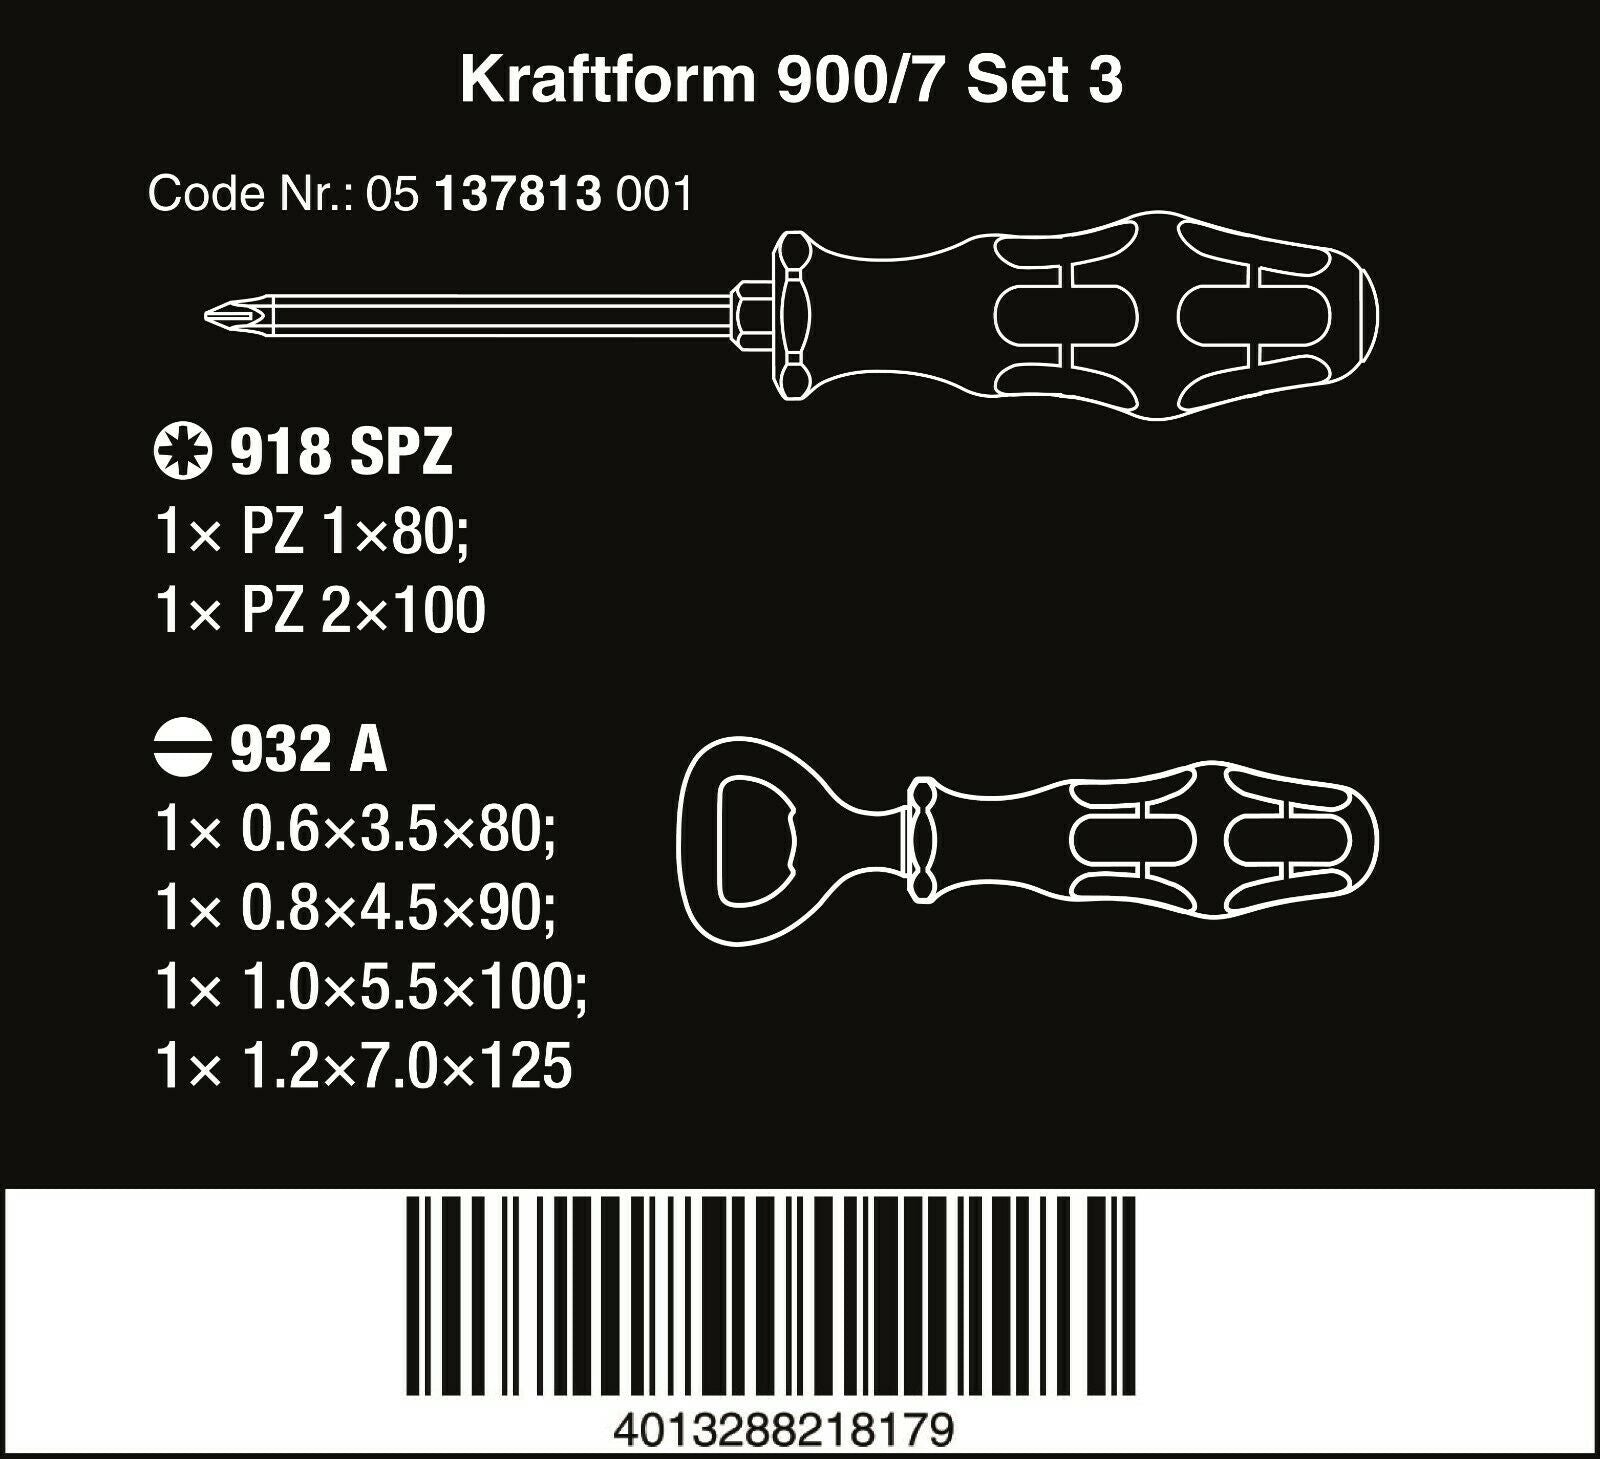 wera 900/7 set 3 kraftform chiseldriver screwdriver set 7 piece 05137813001